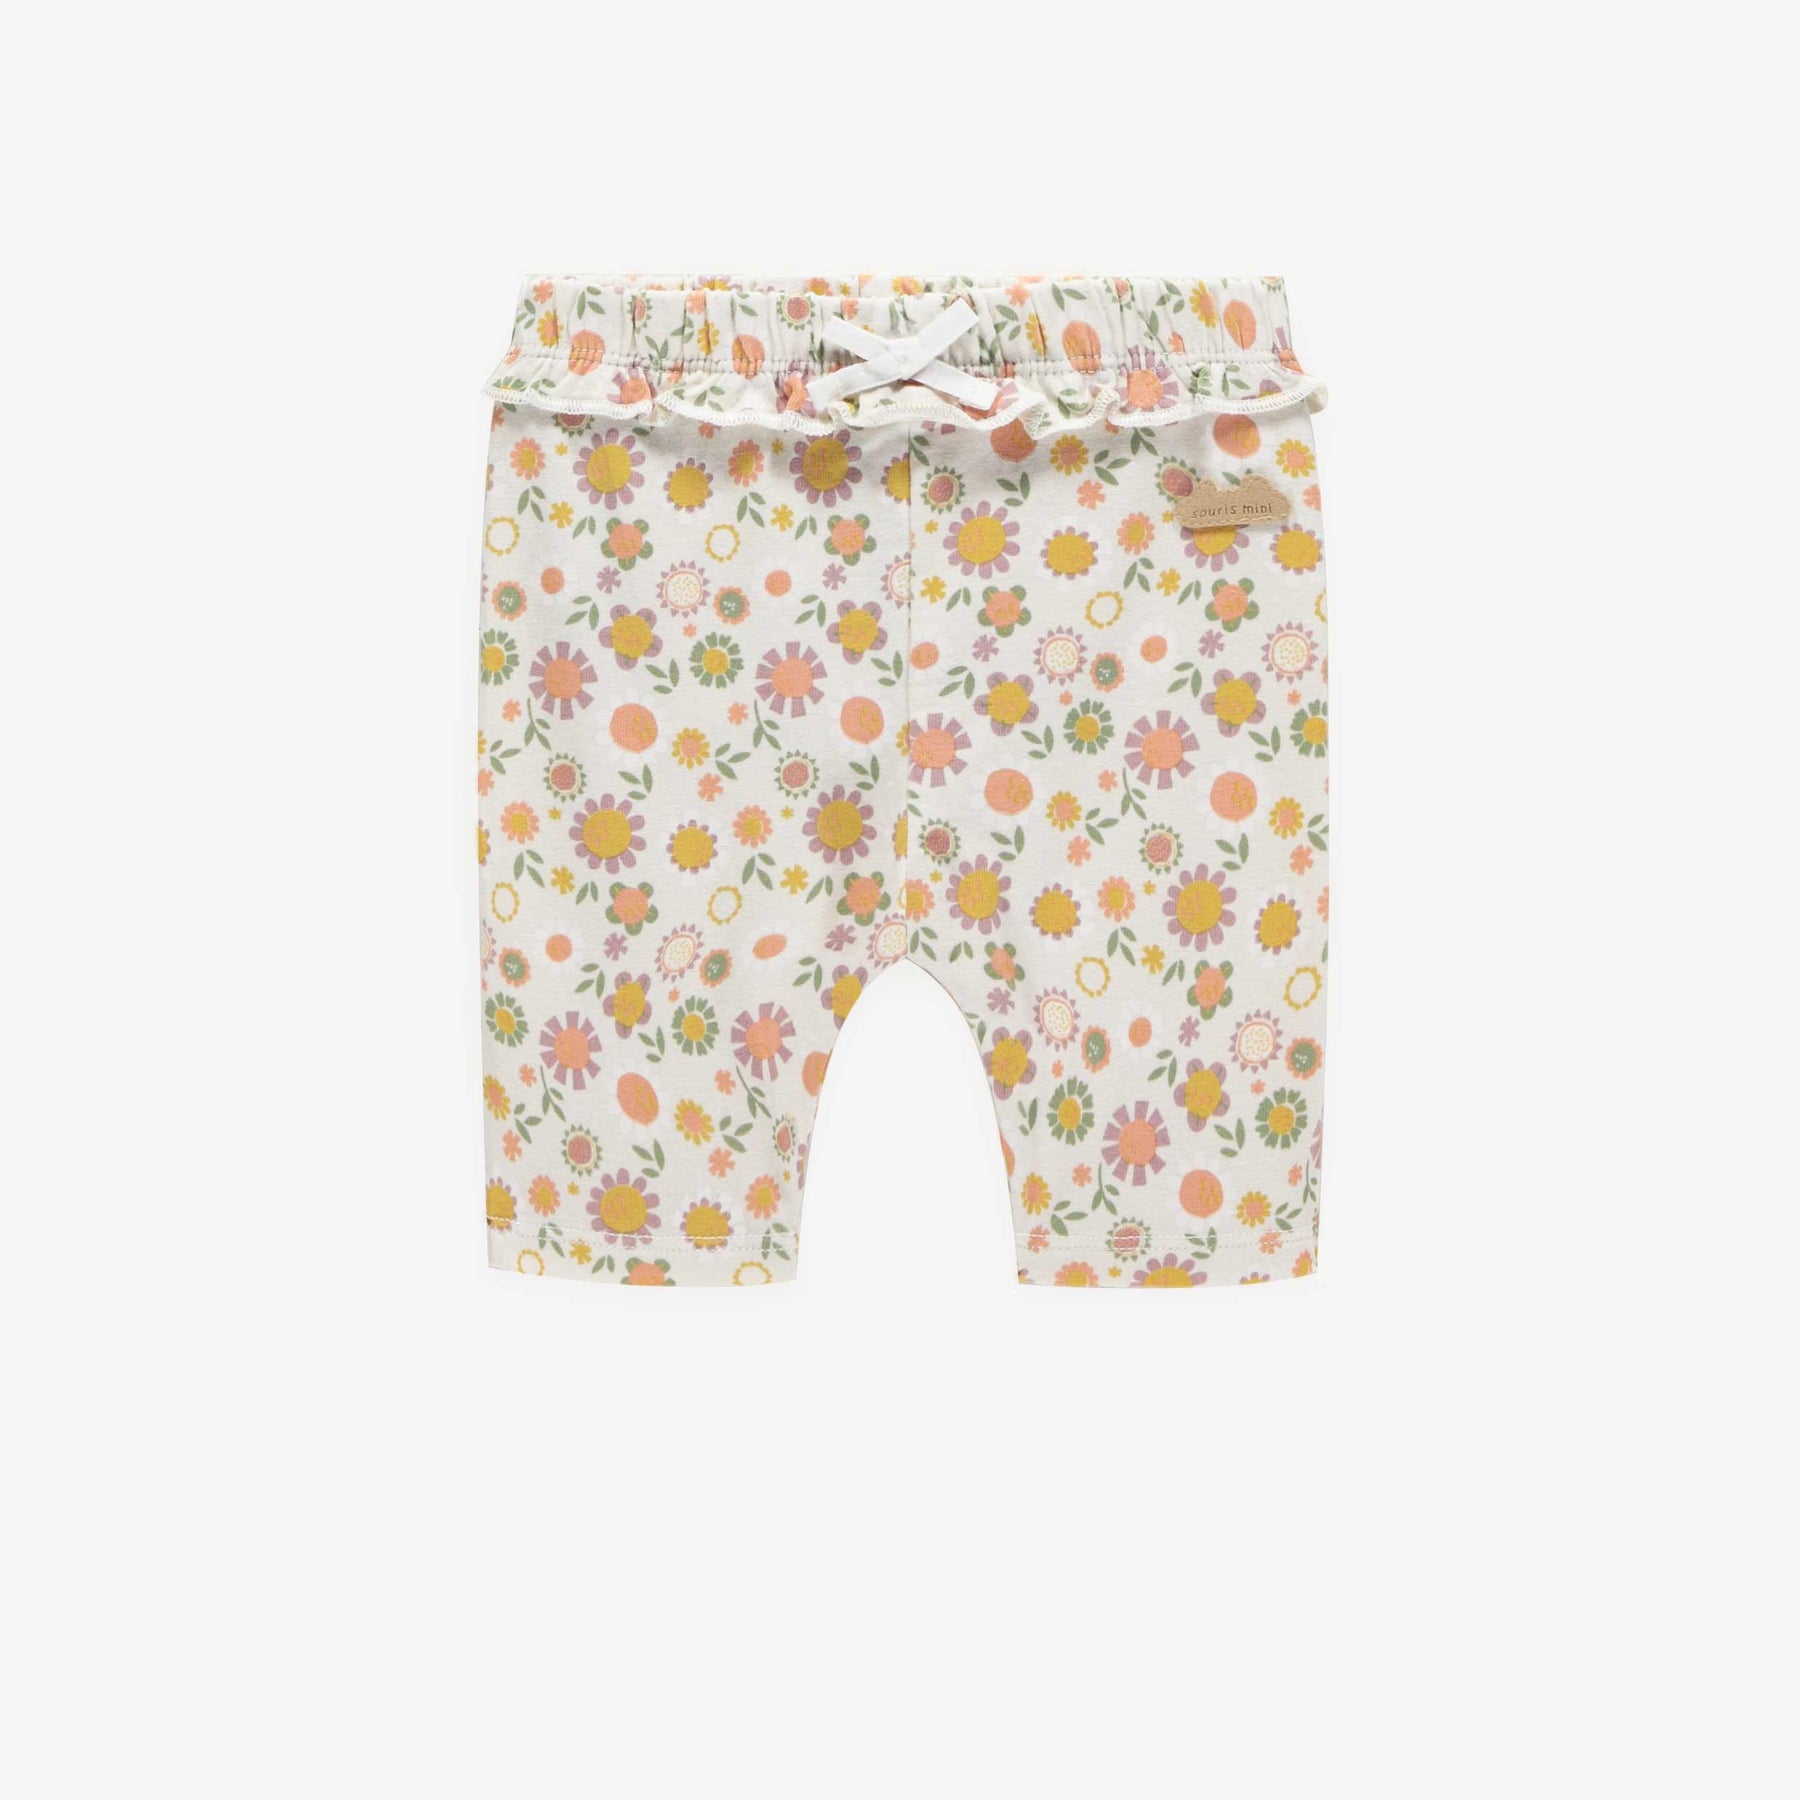 Cream short legging with floral pattern, newborn - Souris Mini